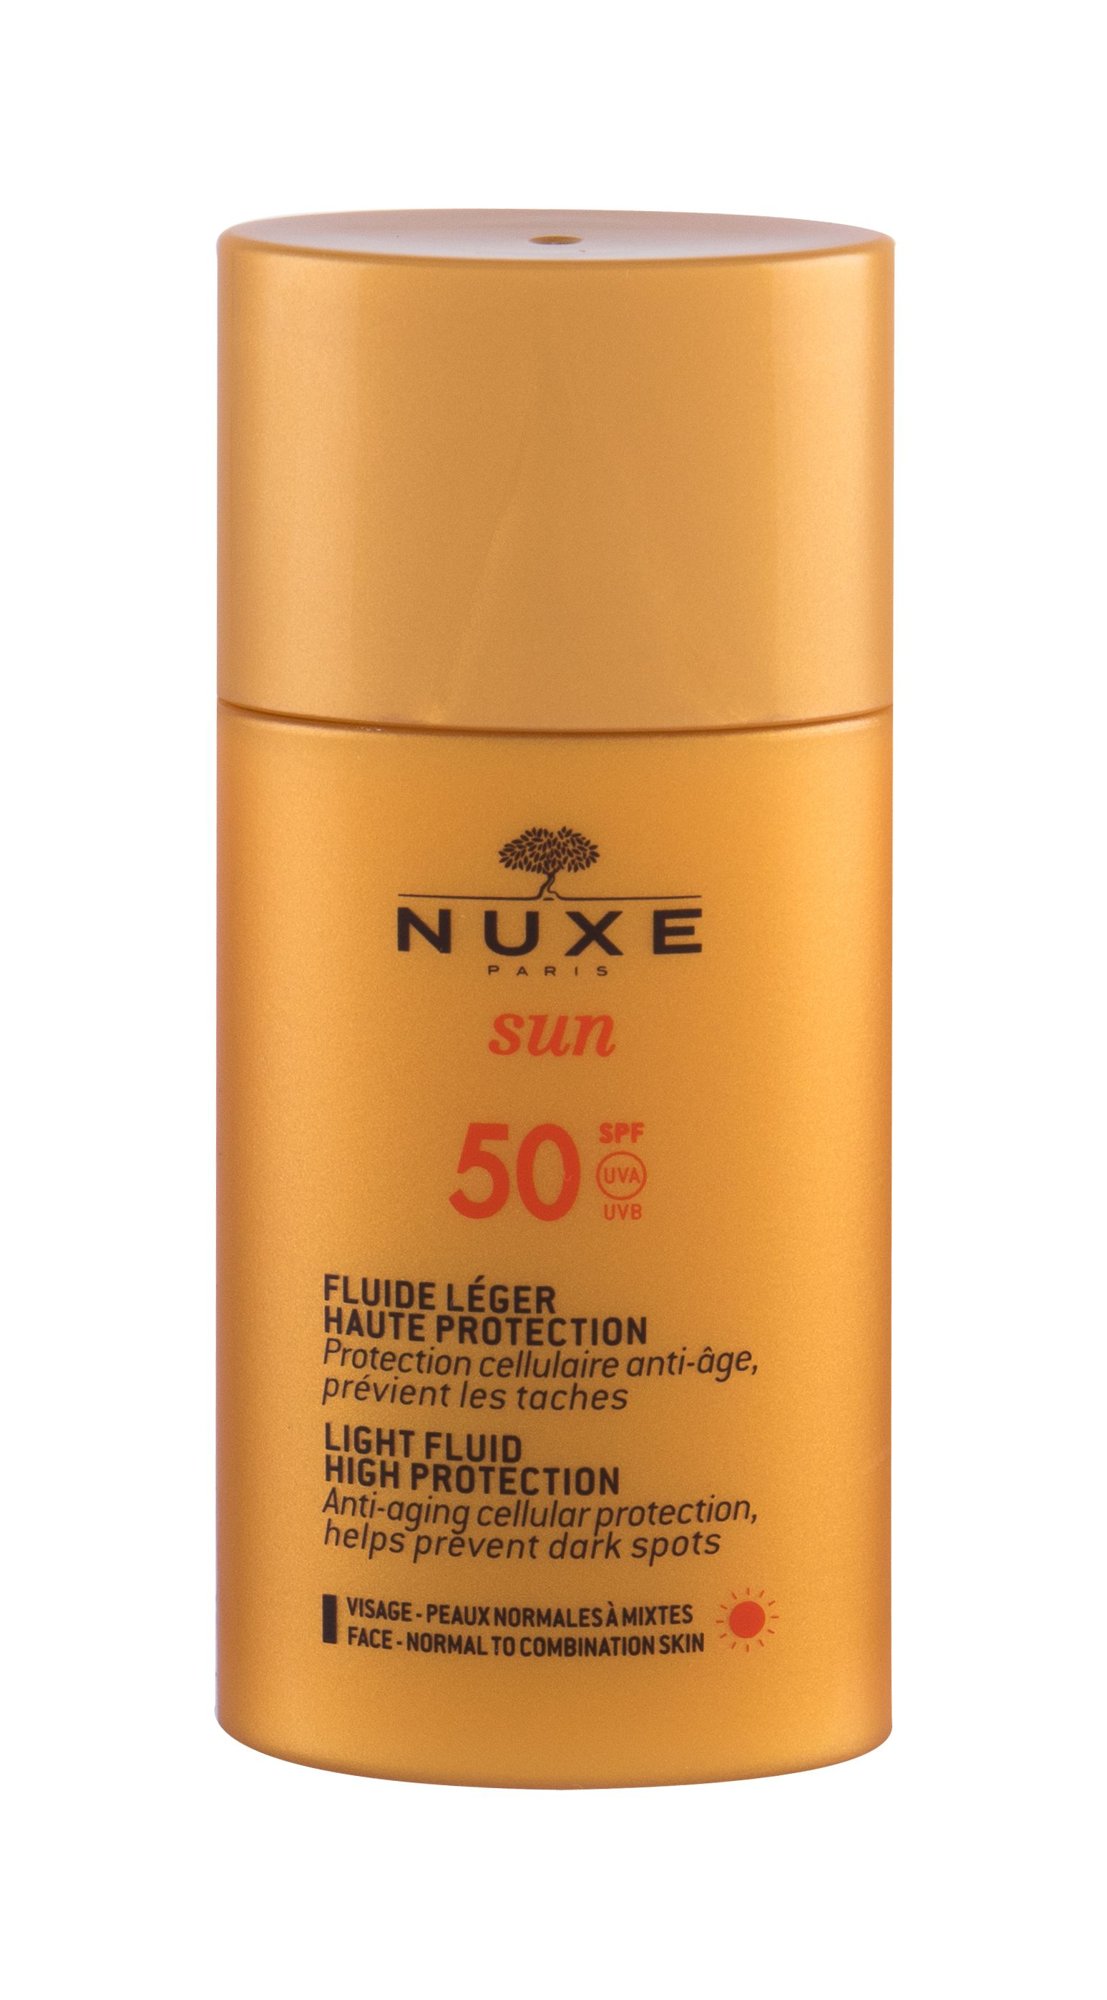 Nuxe Sun Light Fluid veido apsauga